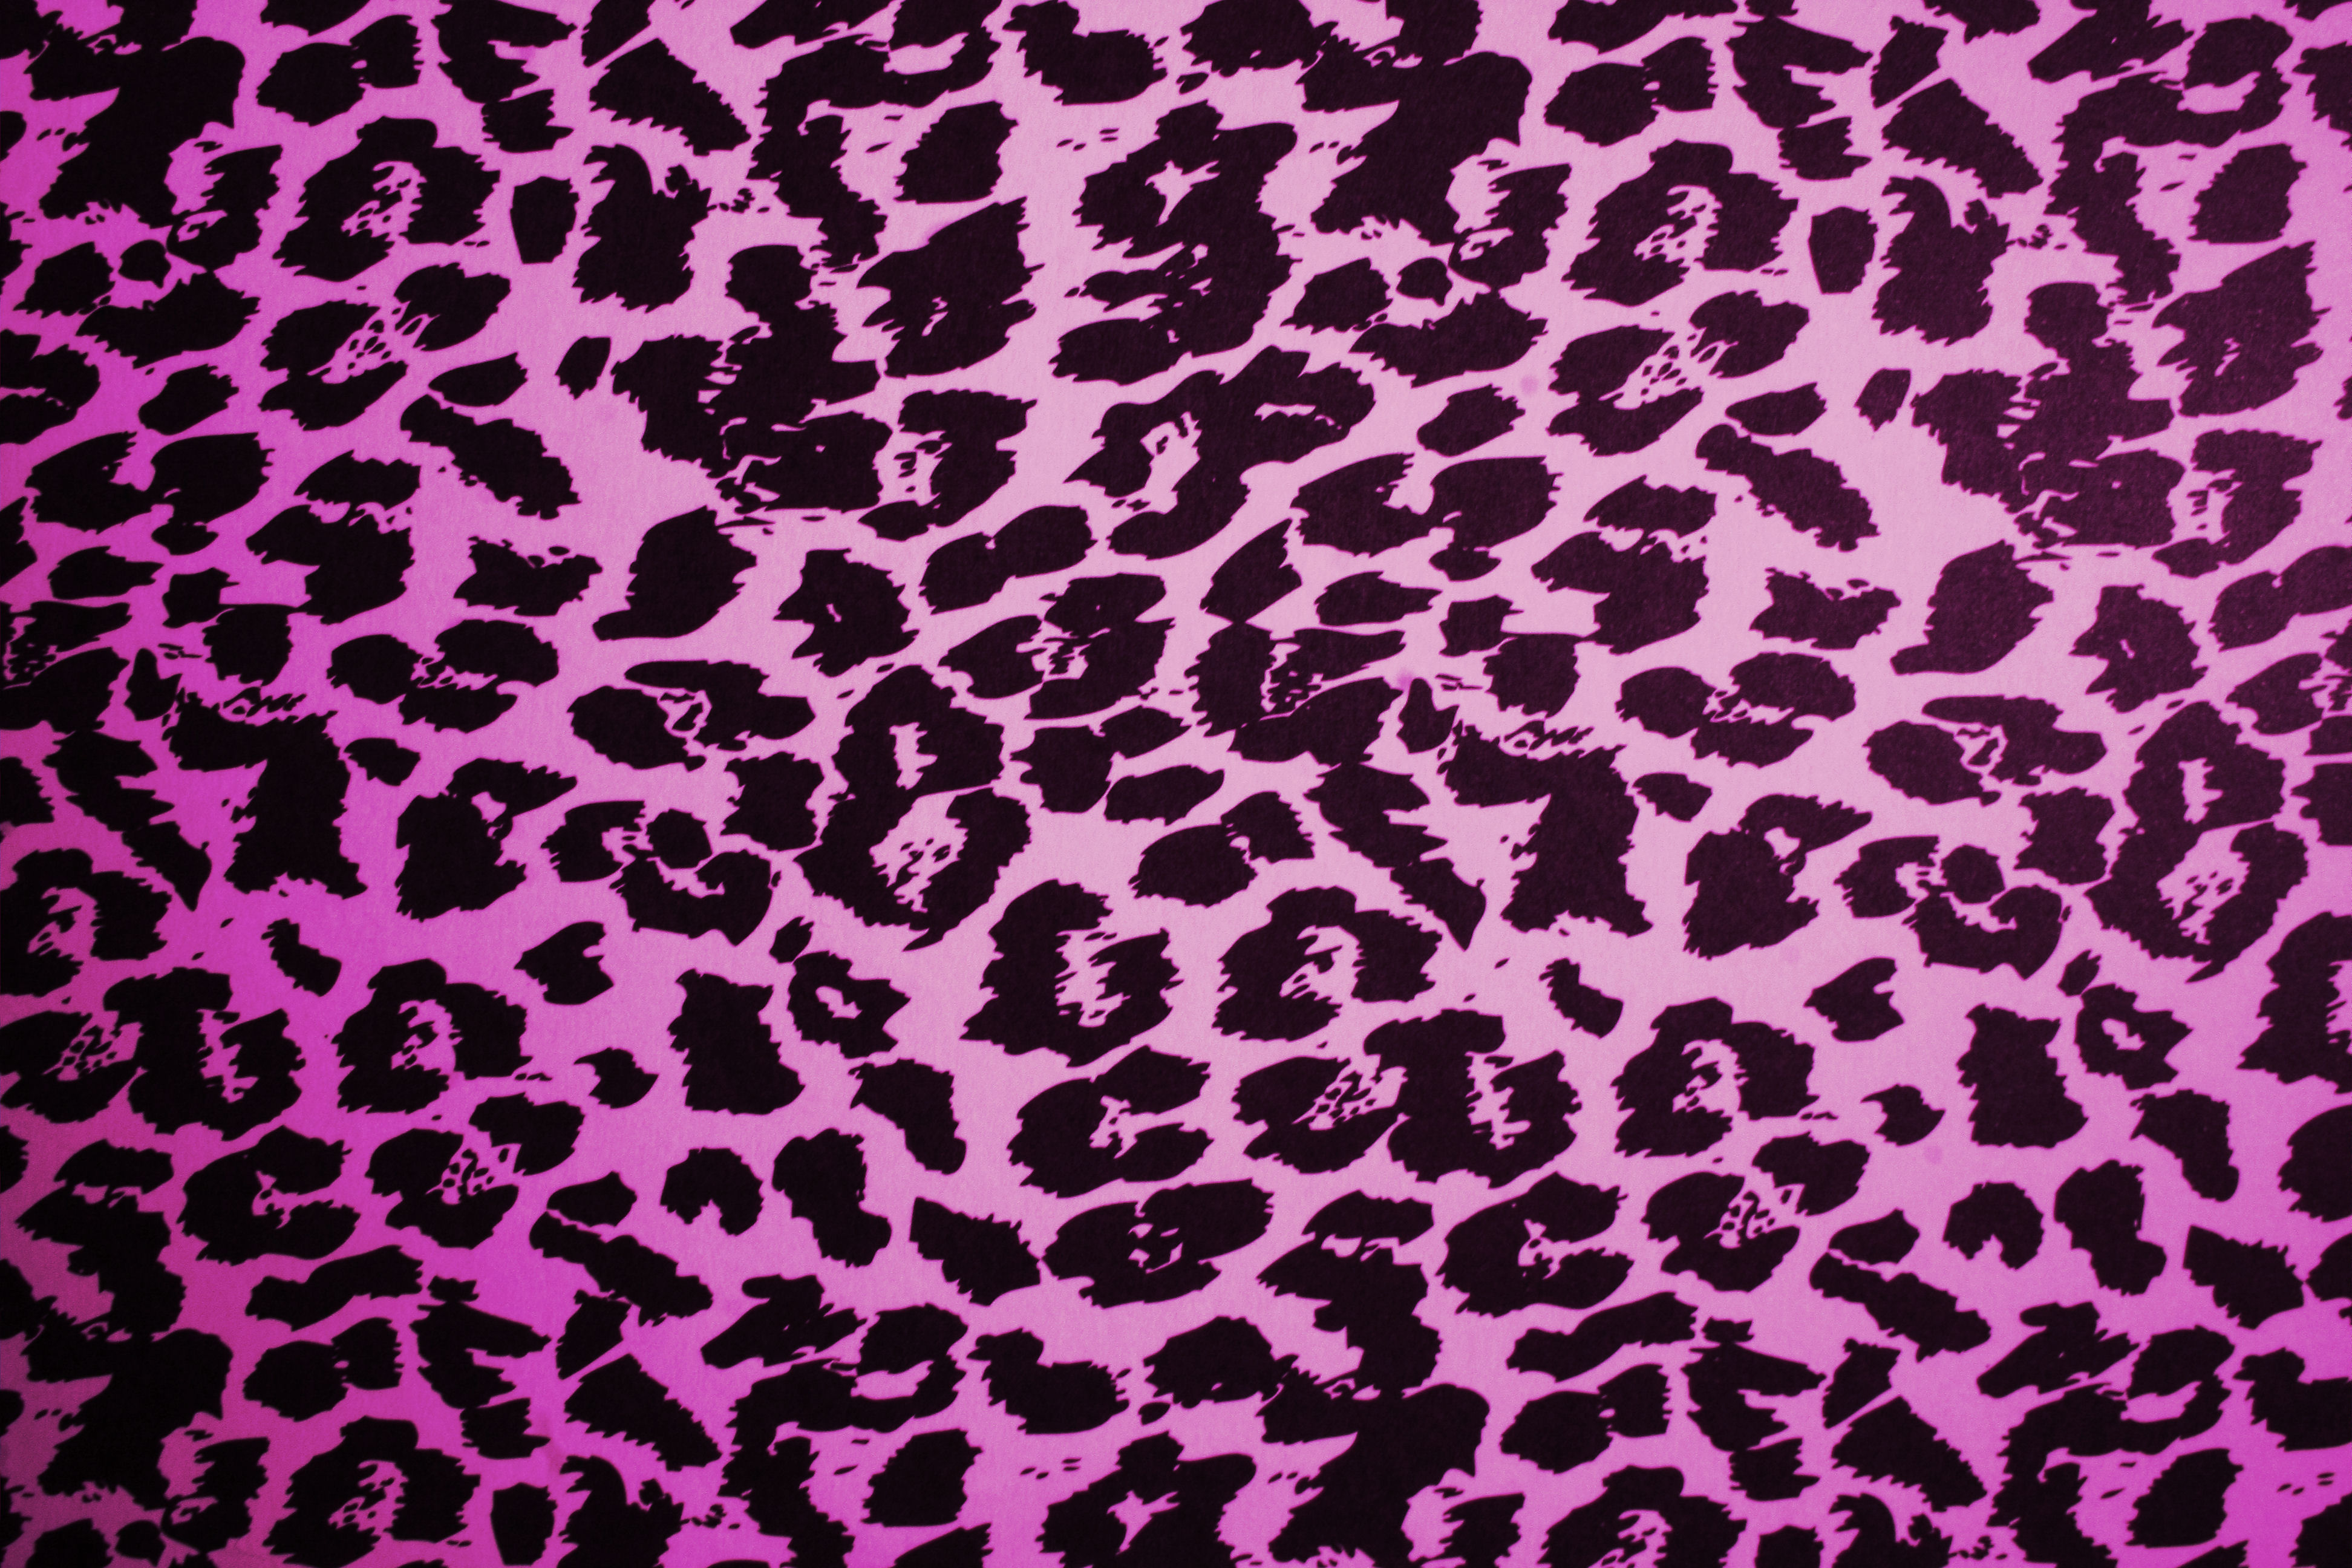 pink leopard wallpaper